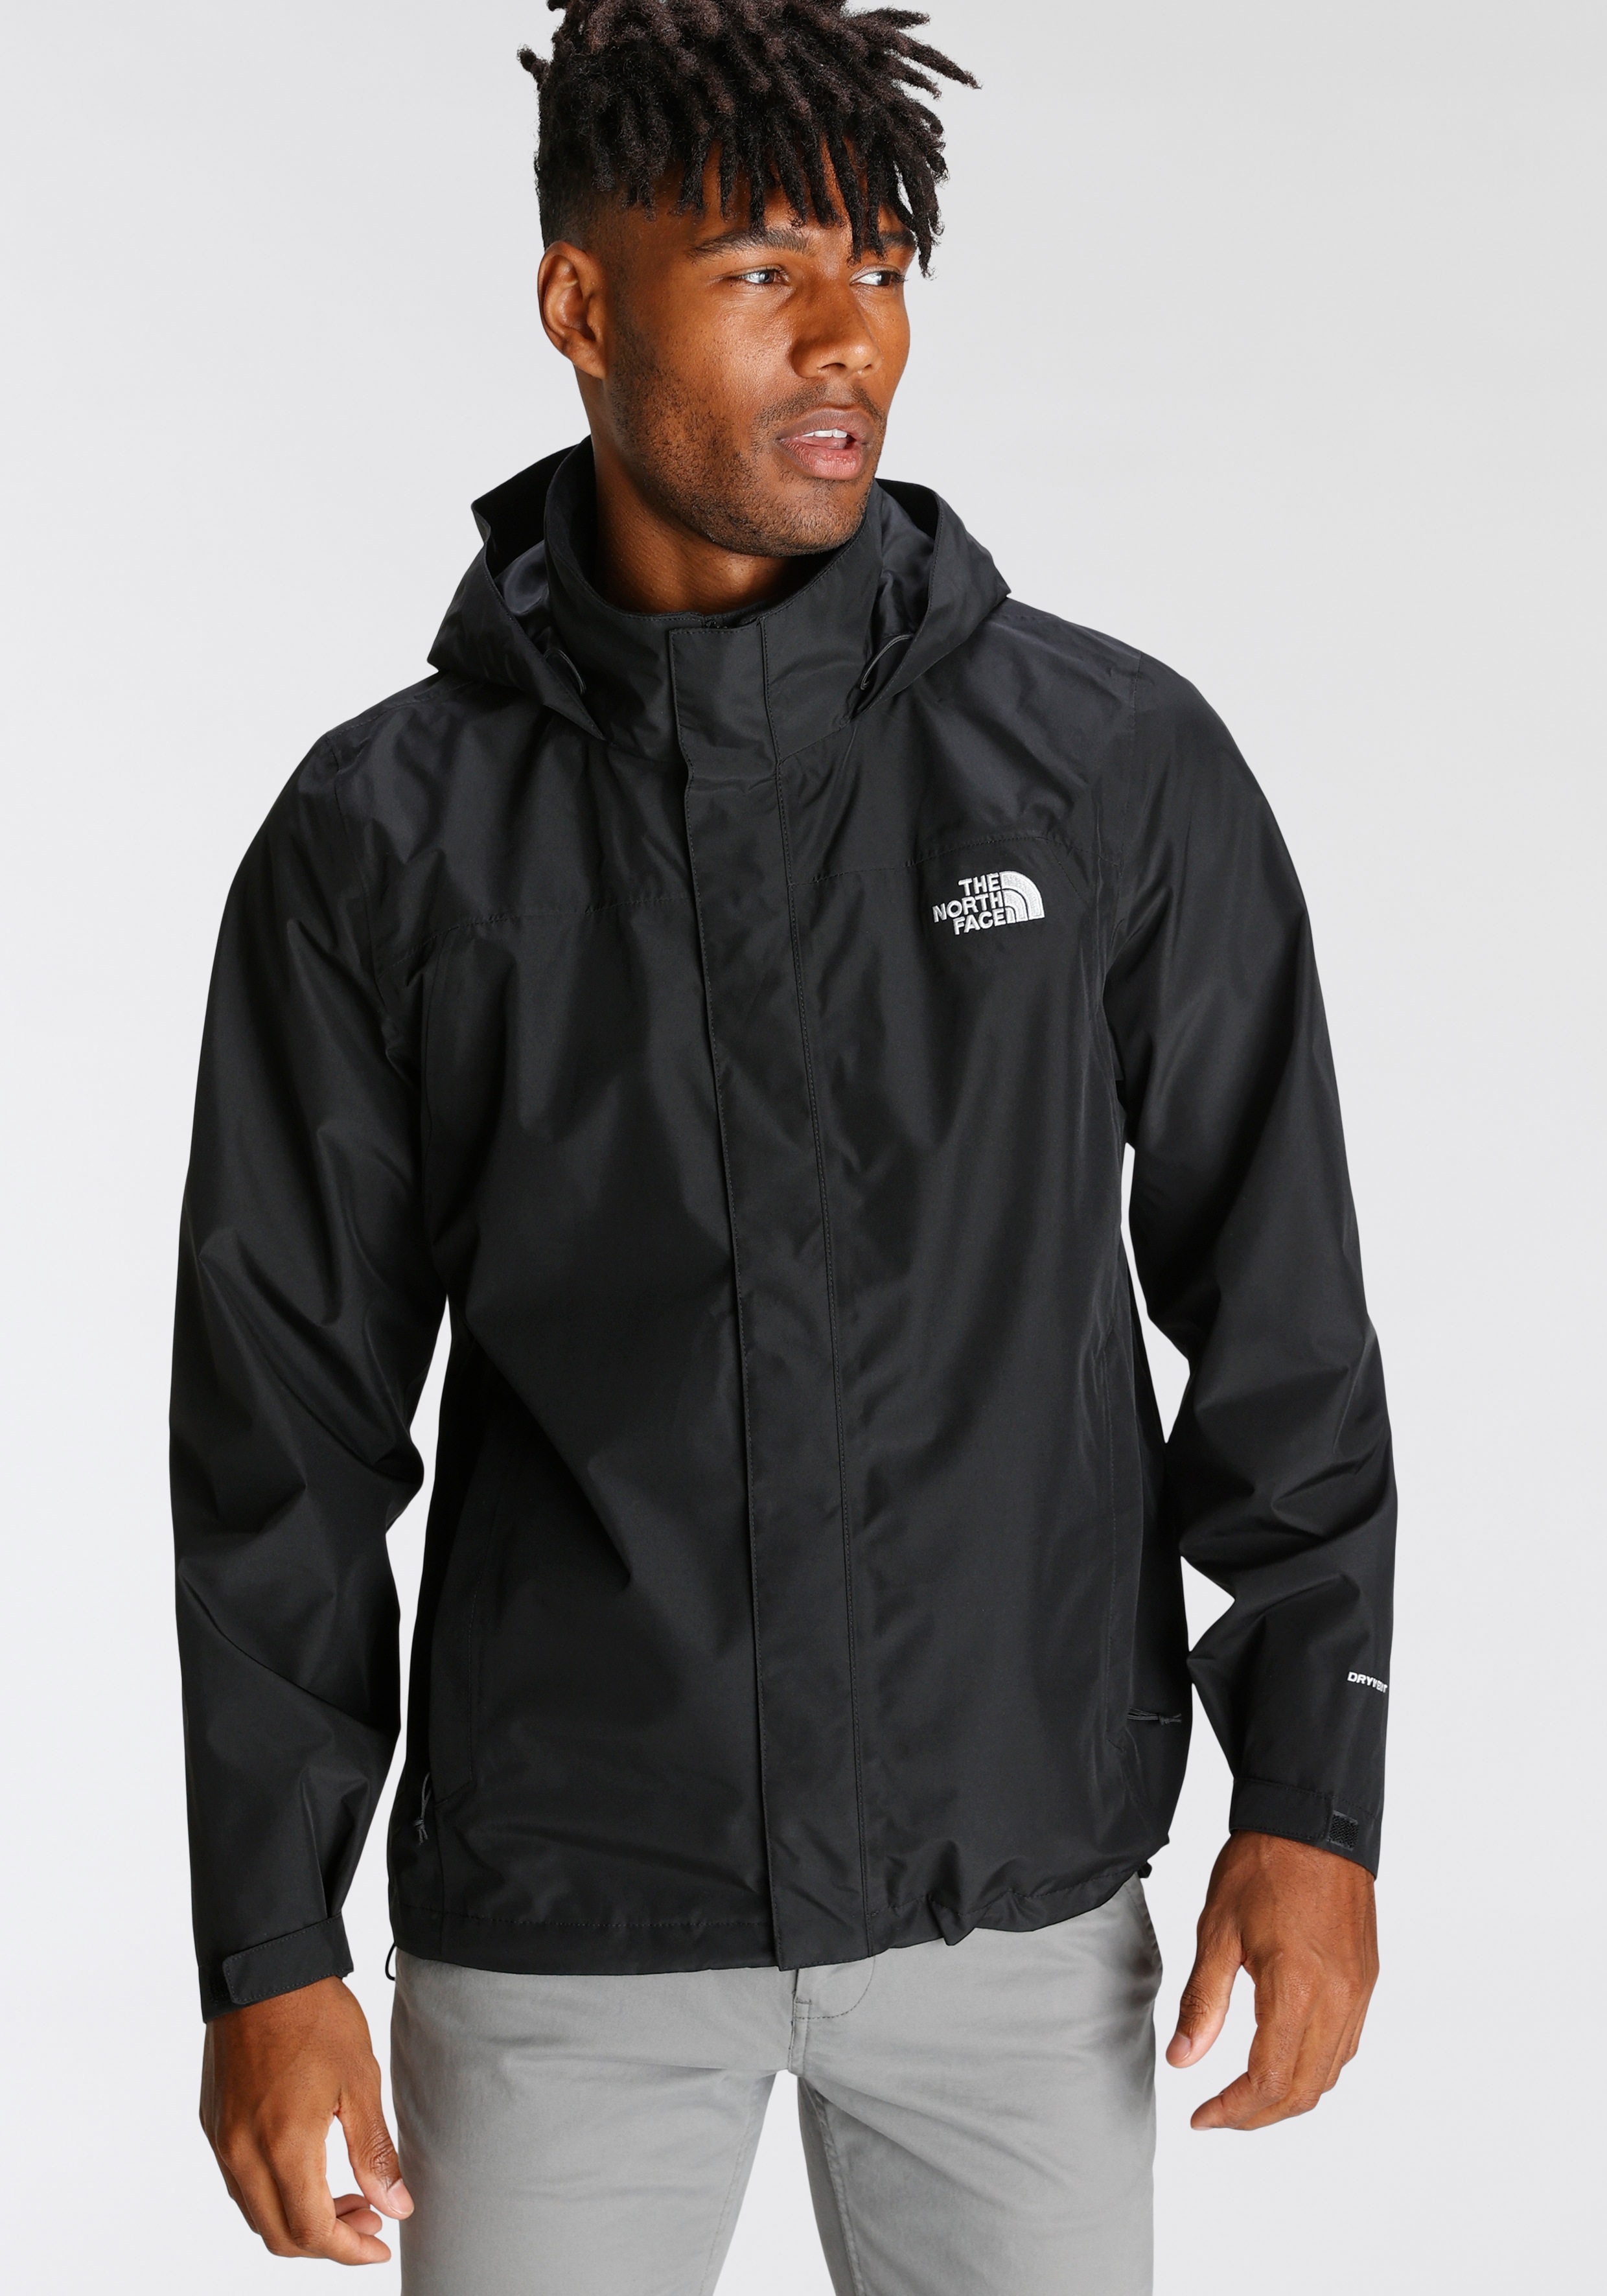 The North Face sangro jacket men - allwetterjacke - tnf black - gr.xl